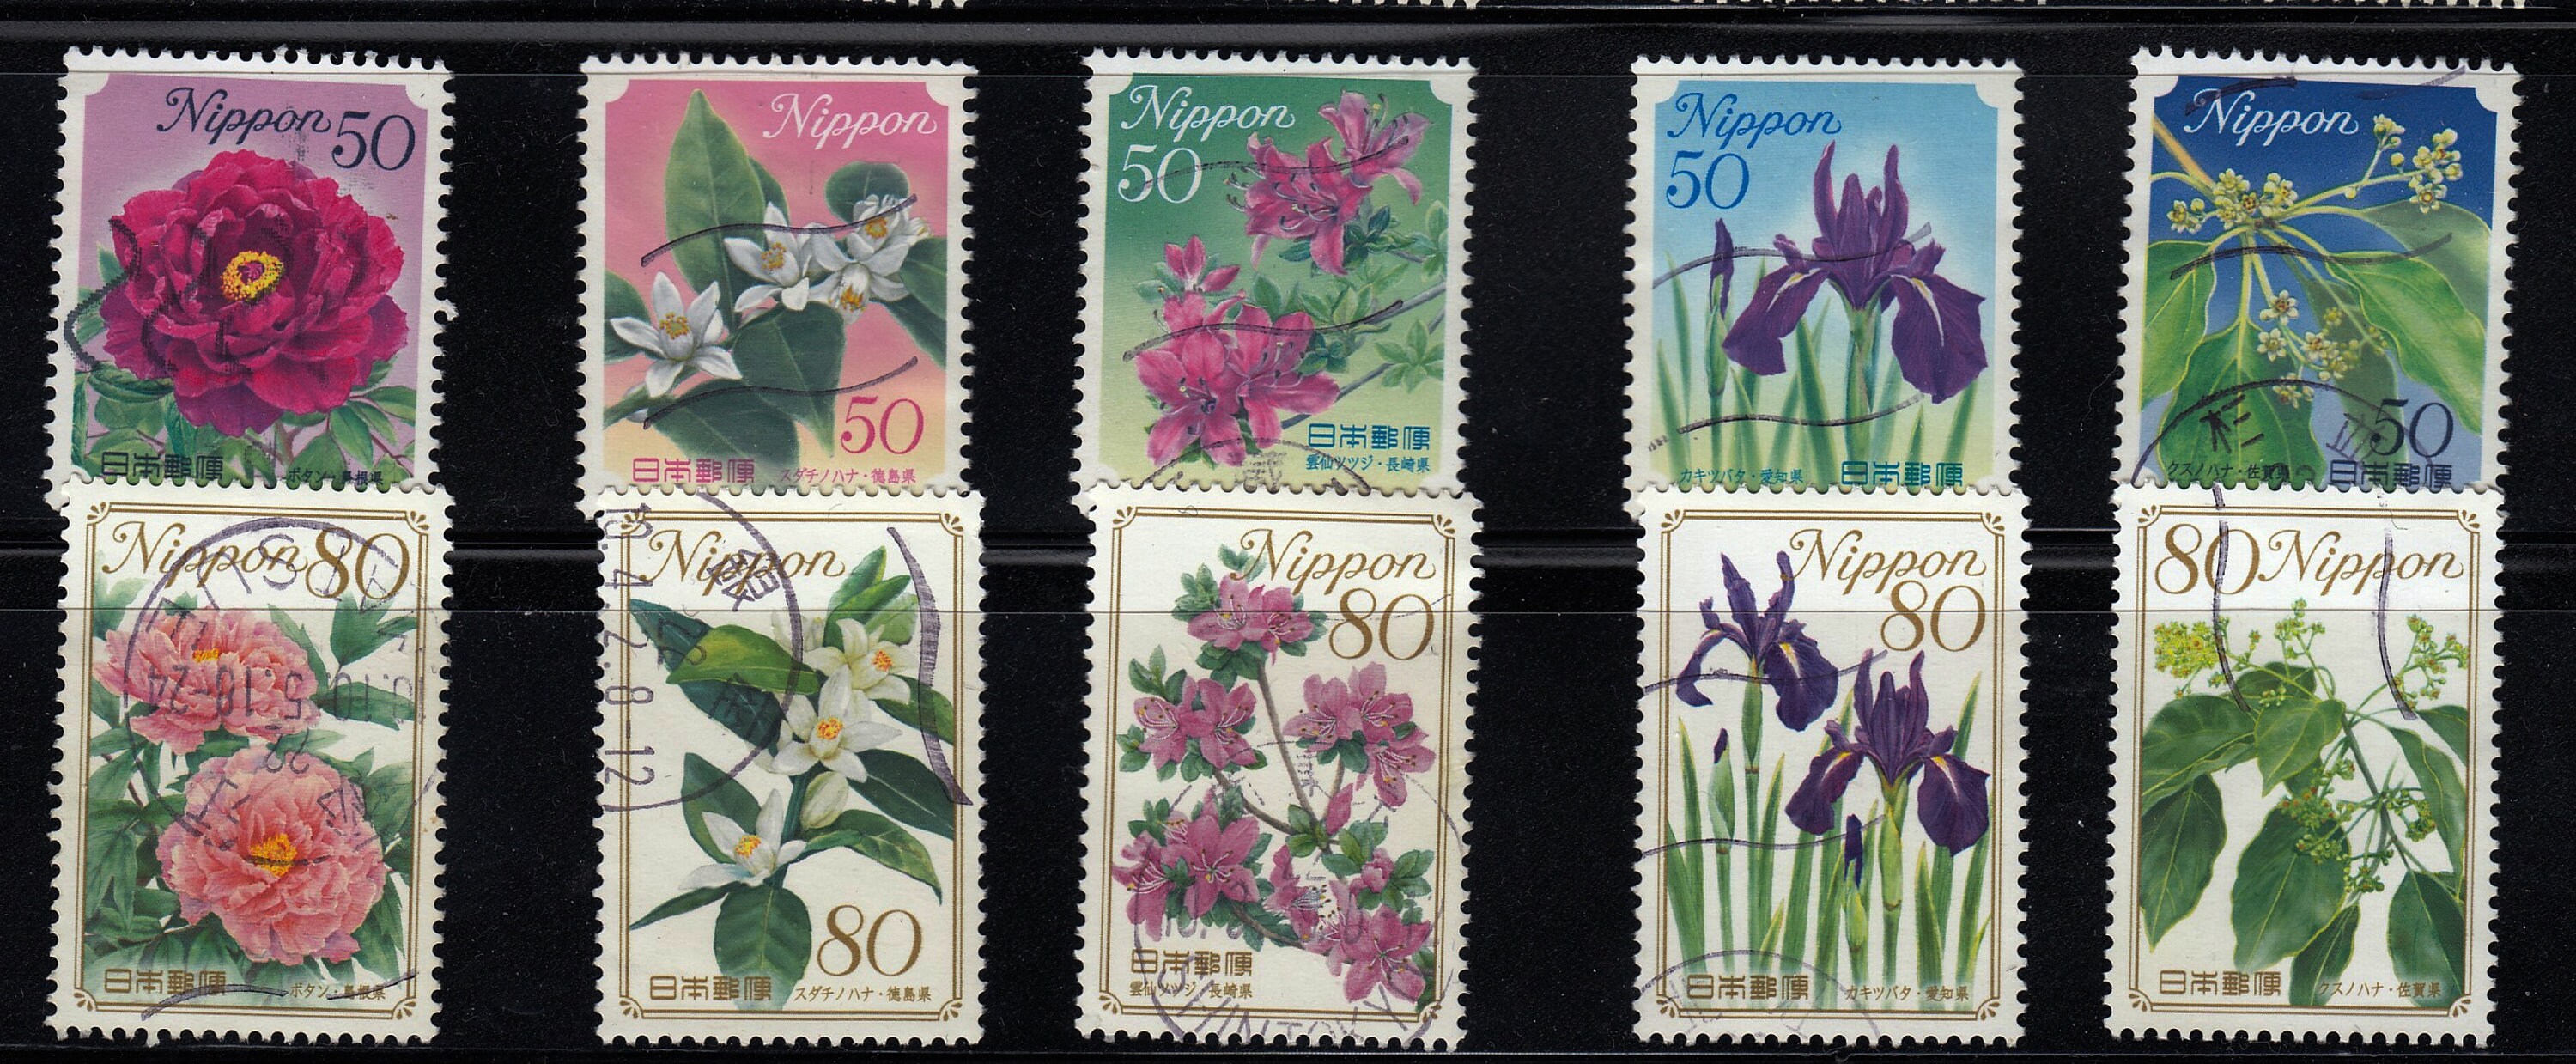 JR Nara Station Stamp  Stamp, Personalized stamps, Pokemon